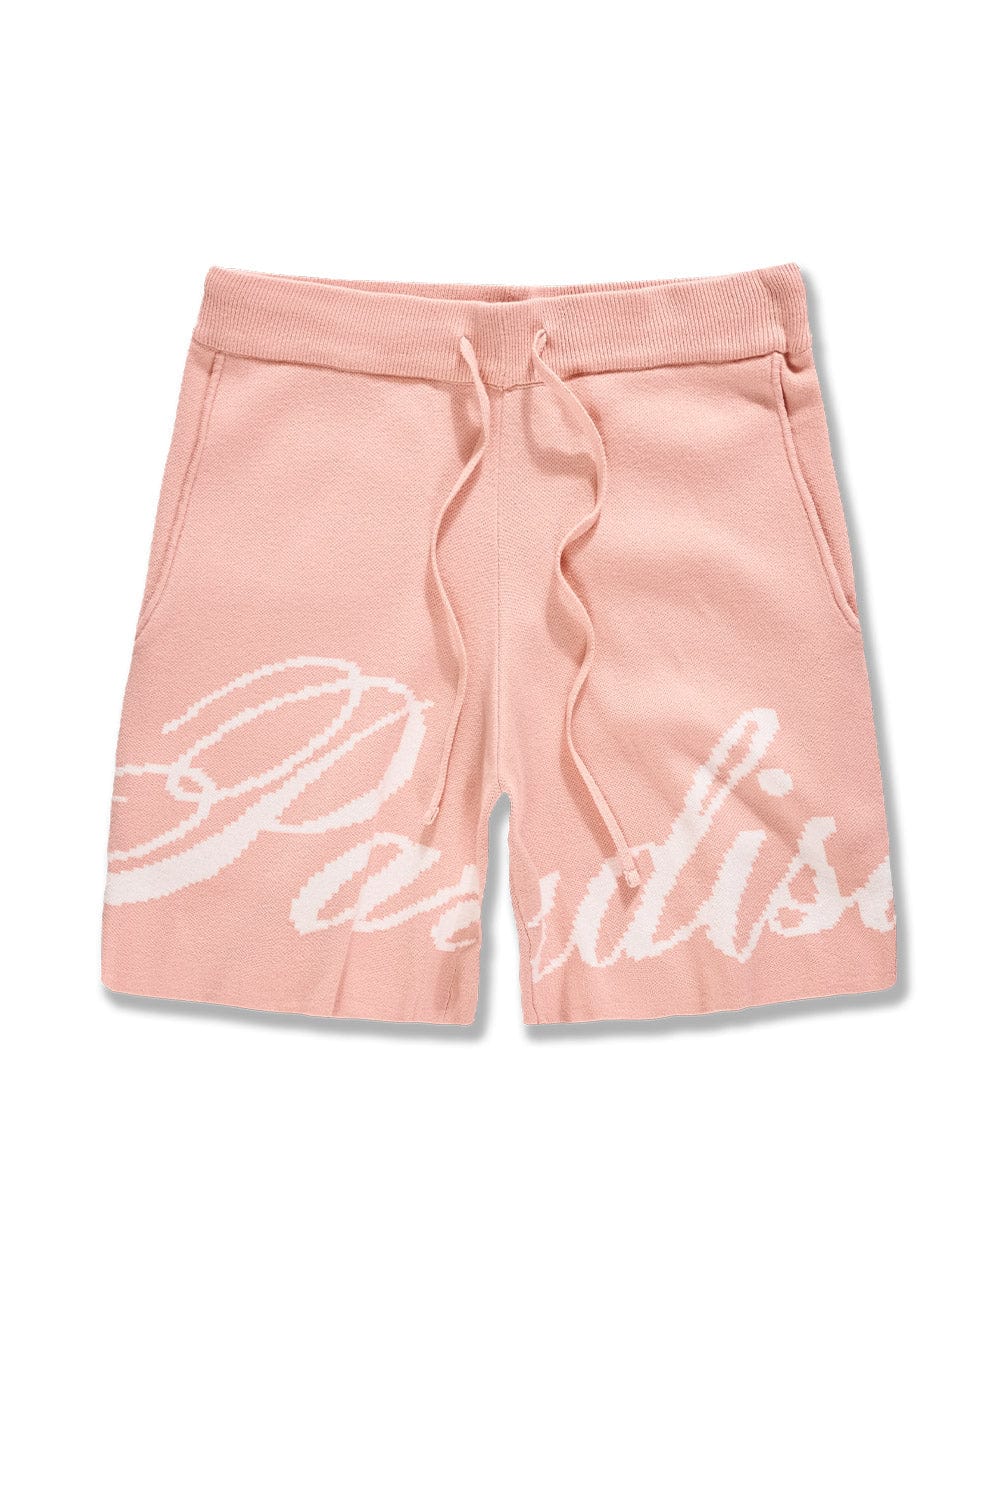 Jordan Craig Retro - Paradise Knit Shorts (Pink)